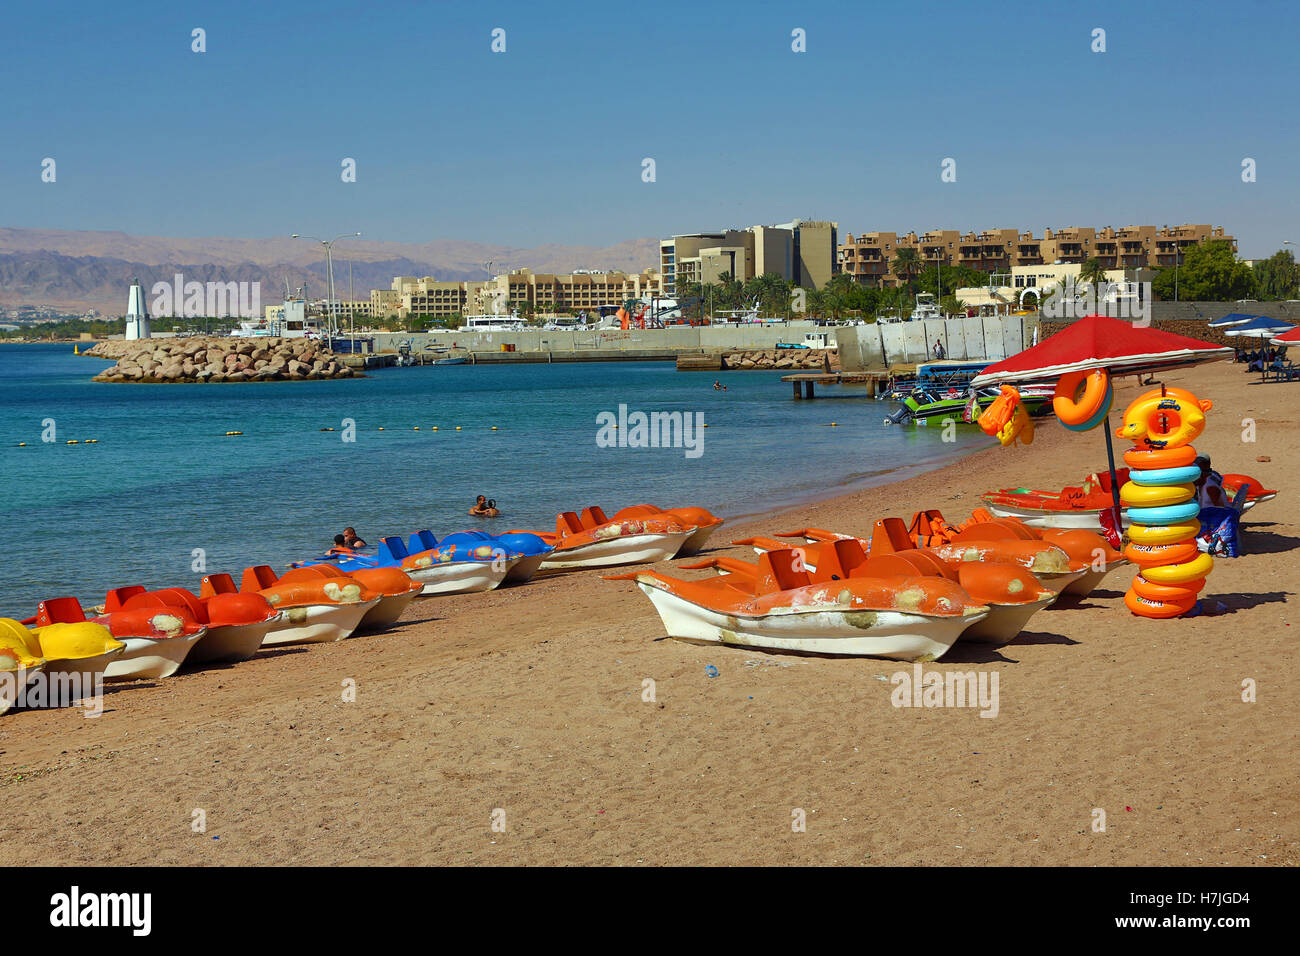 The at Aqaba in Jordan looking in Israel Stock Photo Alamy